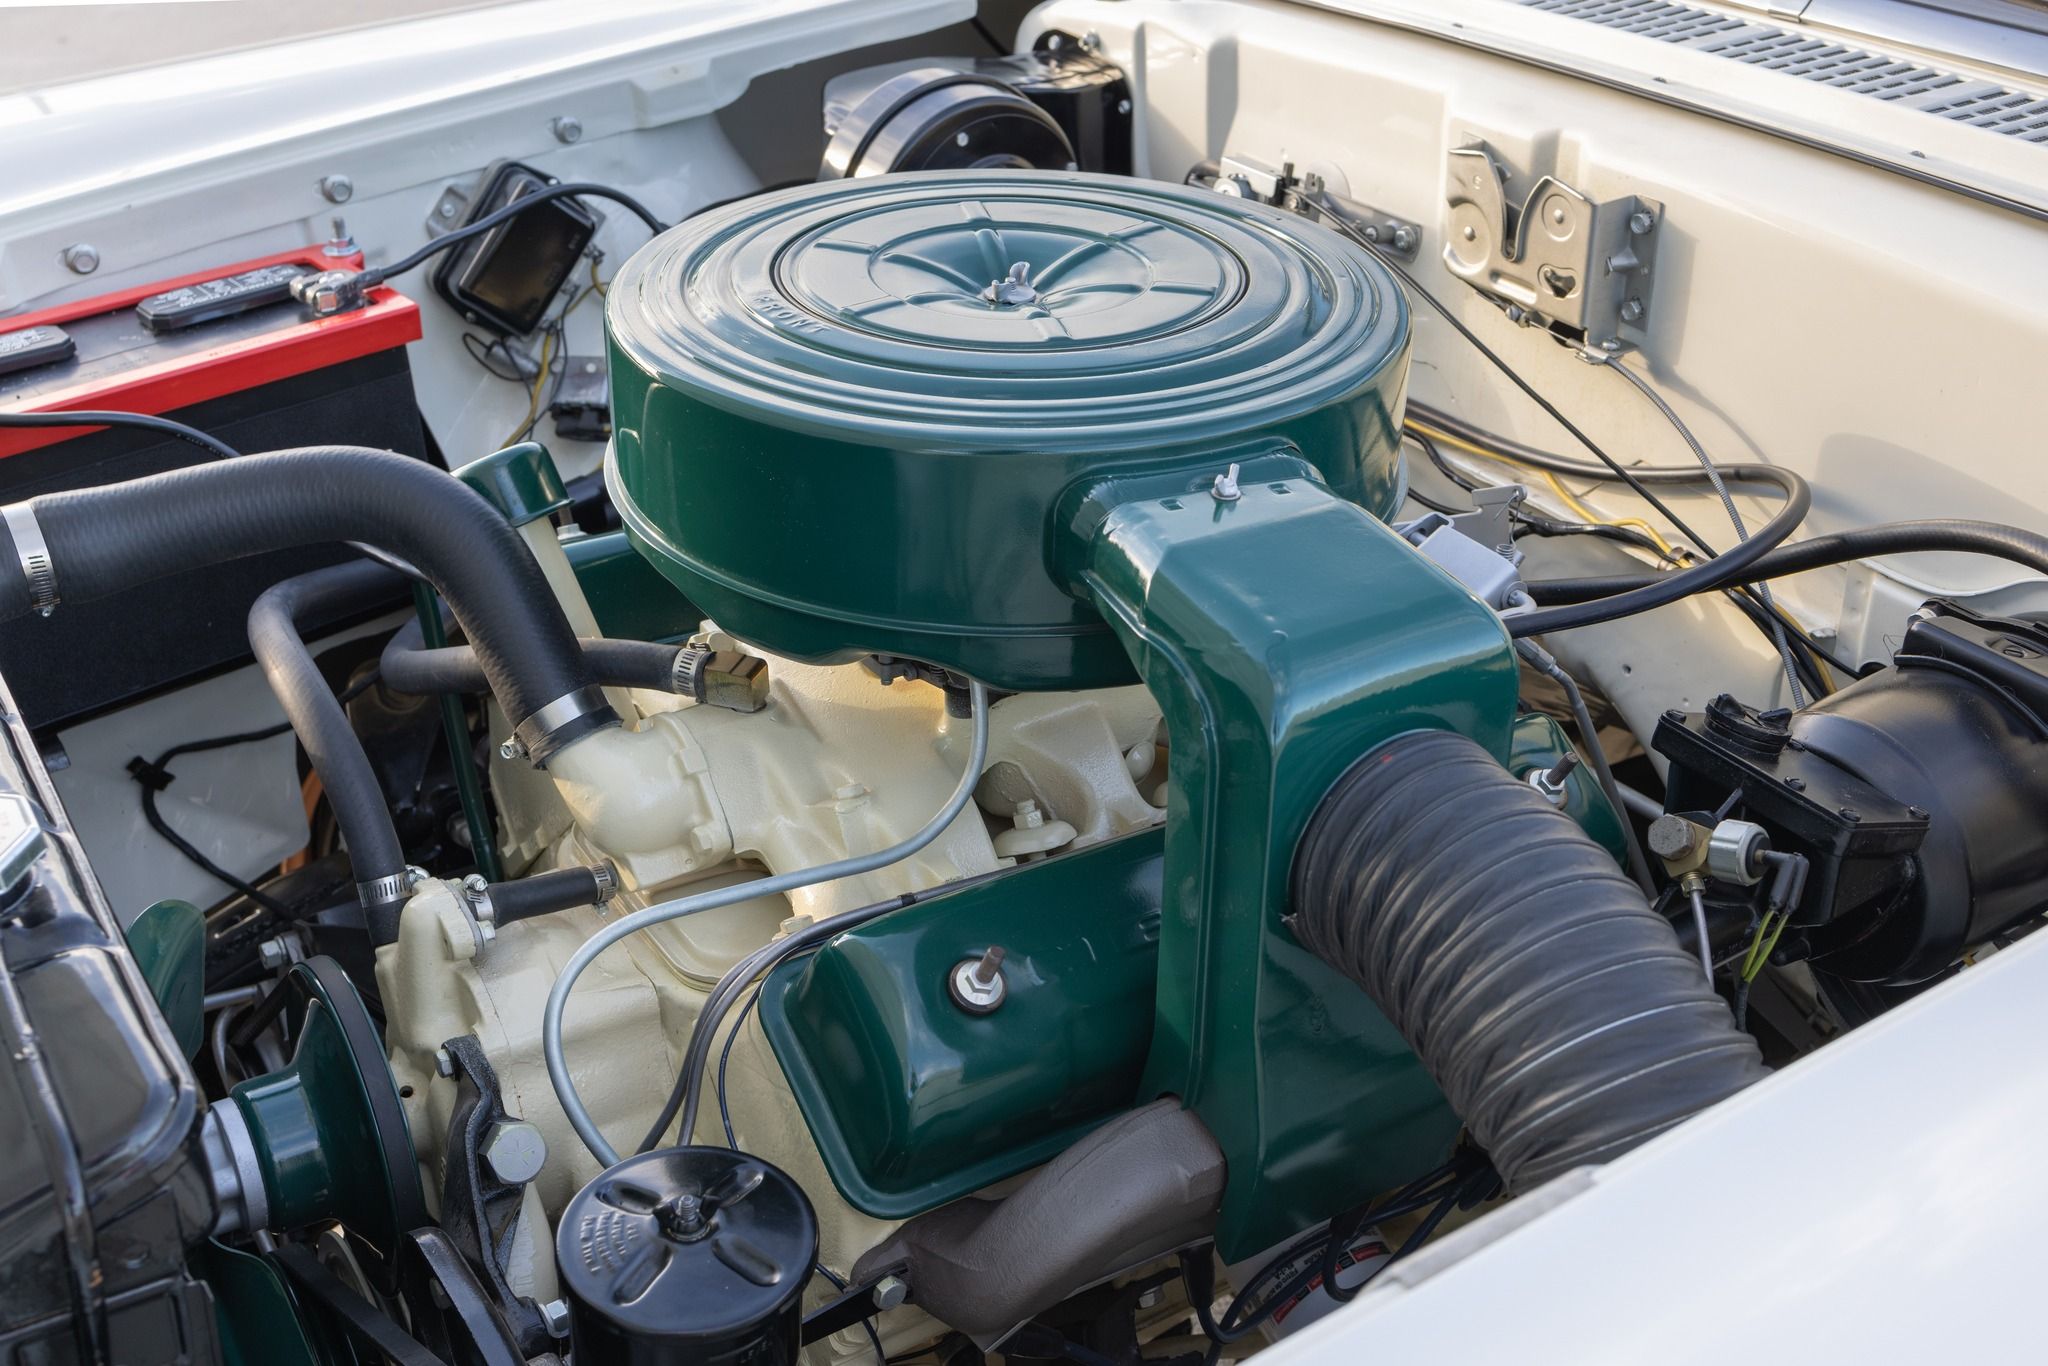 1959 Mercury Convertible engine bay 213 cubic-inch V8 engine